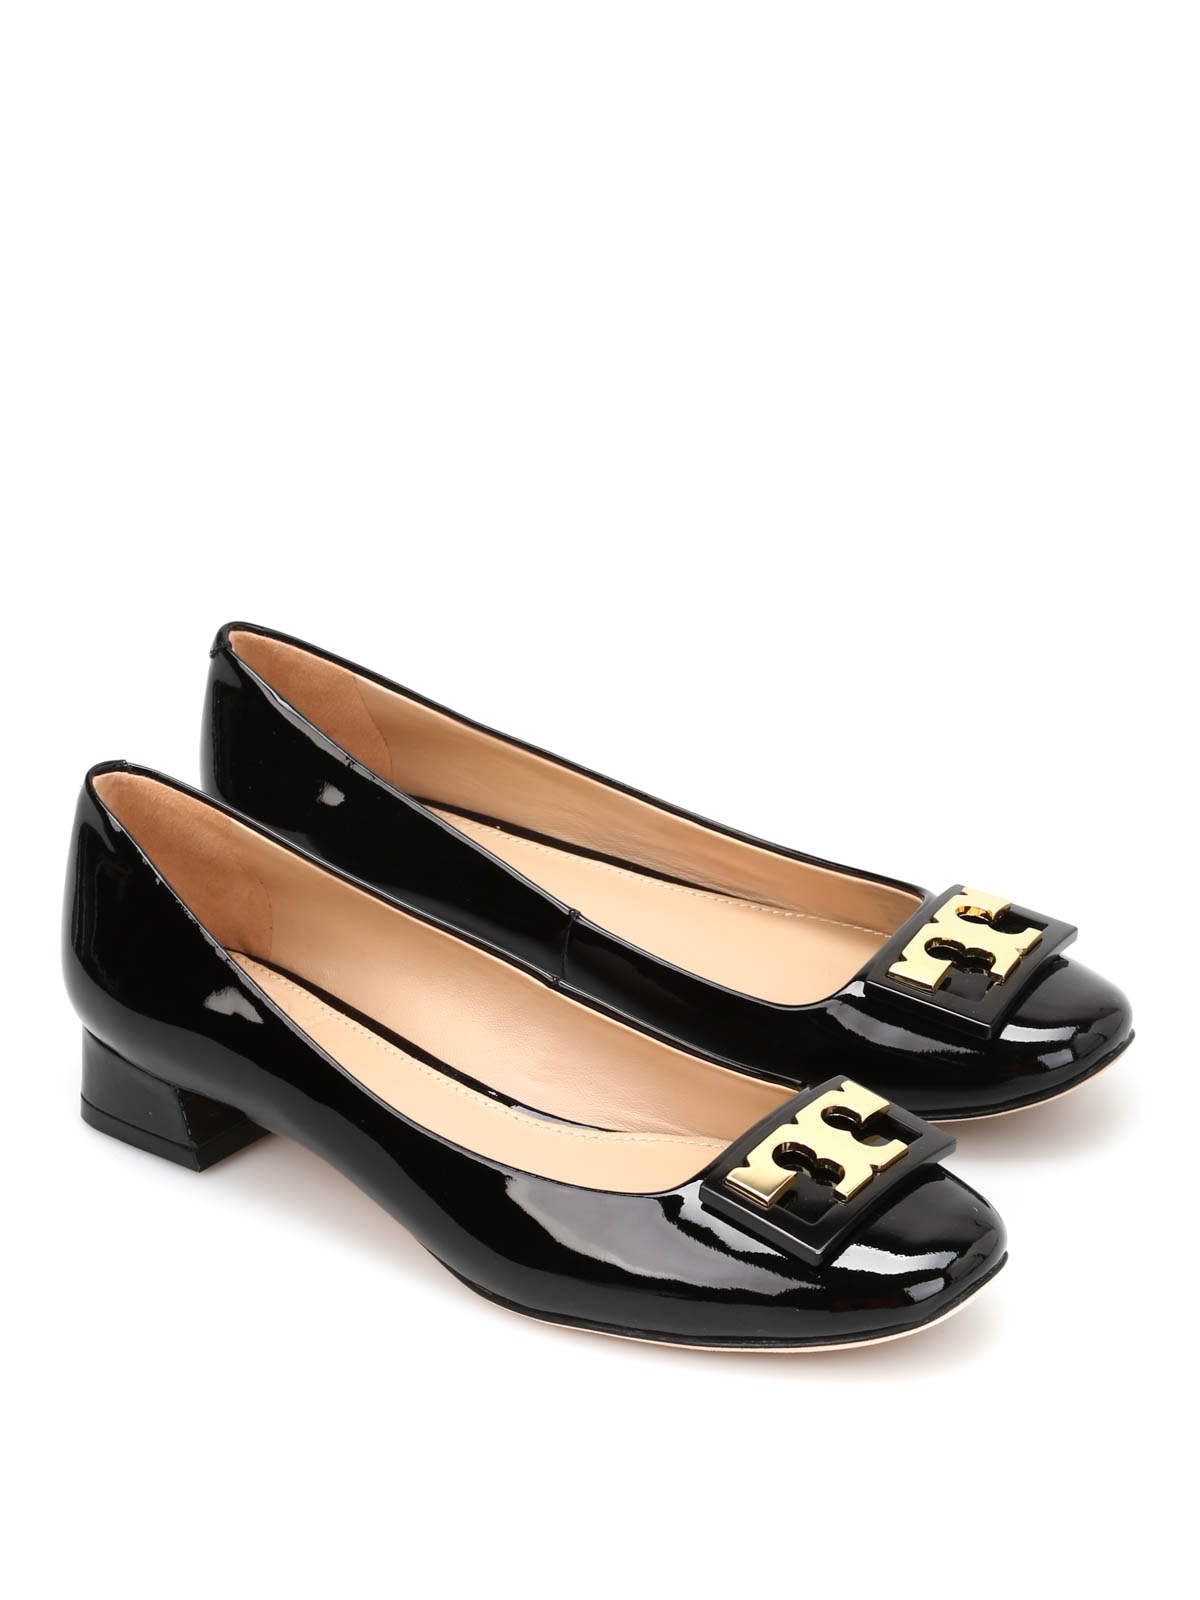 Court shoes Tory Burch - Gigi pumps - 31435001 | Shop online at iKRIX